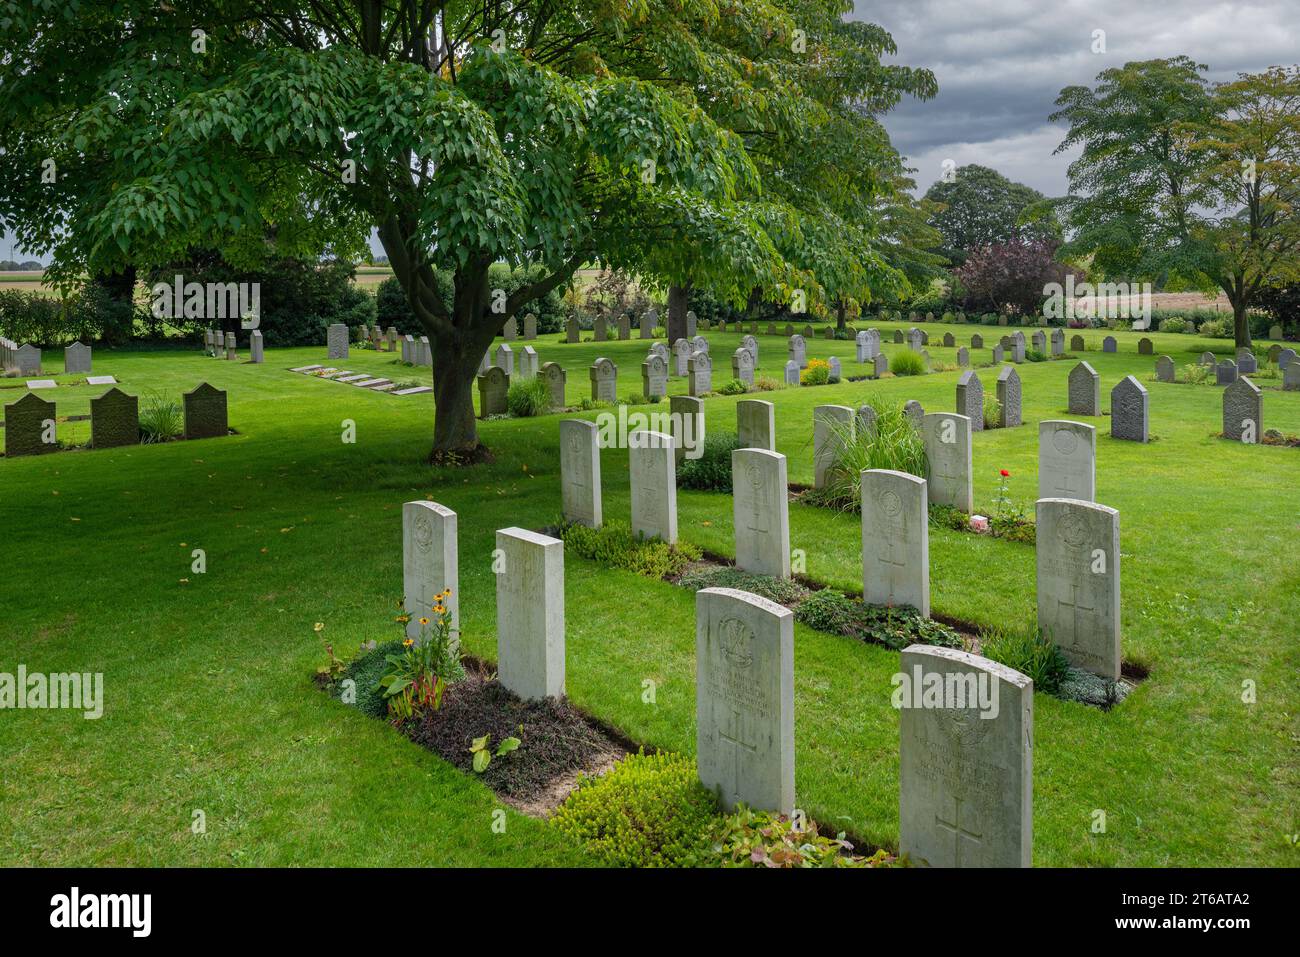 British WWI headstones at the St. Symphorien Military Cemetery, First World War One burial ground at Saint-Symphorien near Mons, Hainaut, Belgium Stock Photo